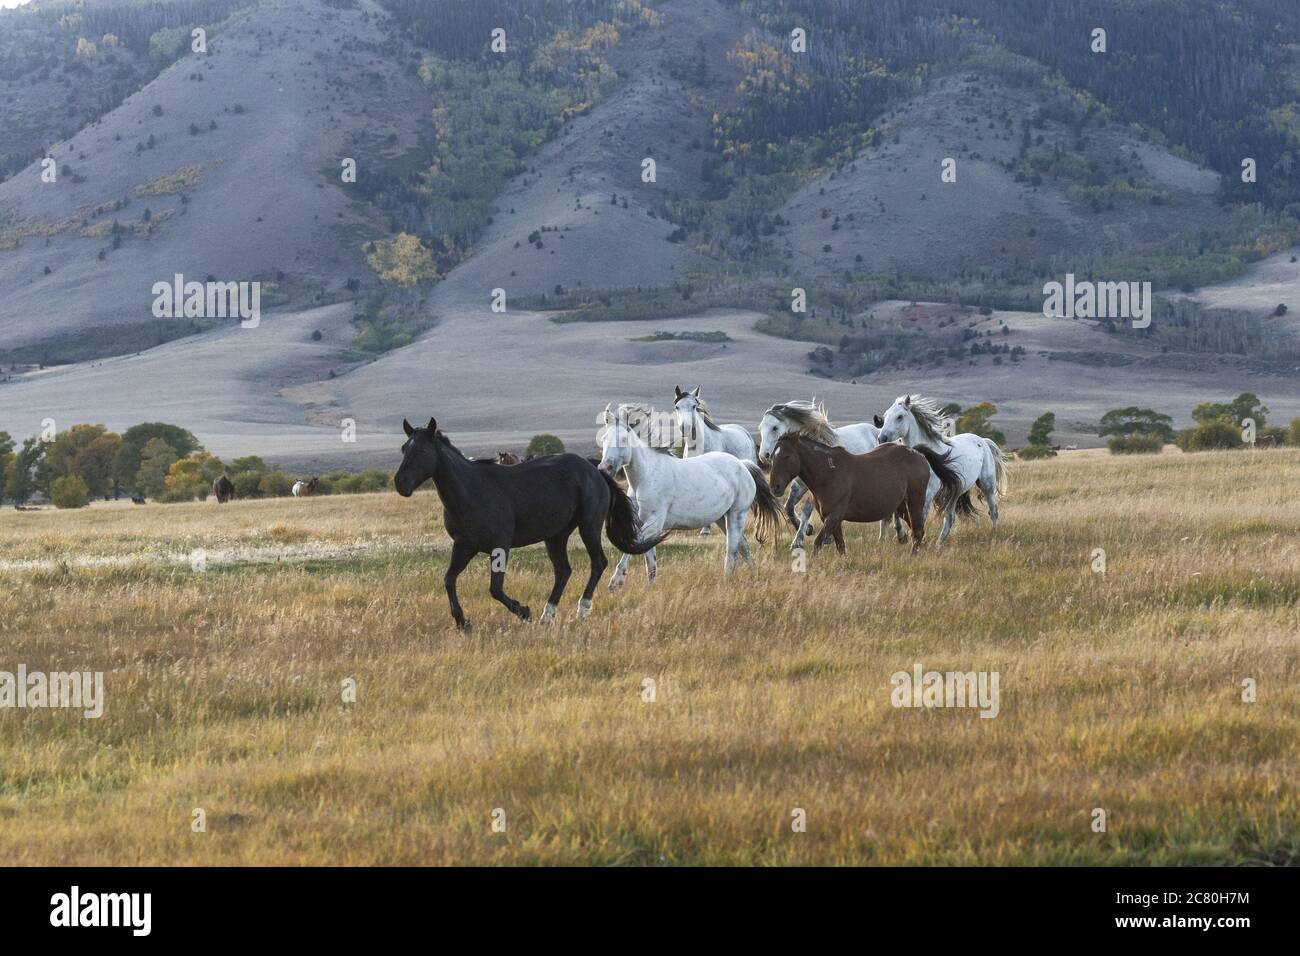 Wild horses mustangs America USA United States U.S.A. Stock Photo